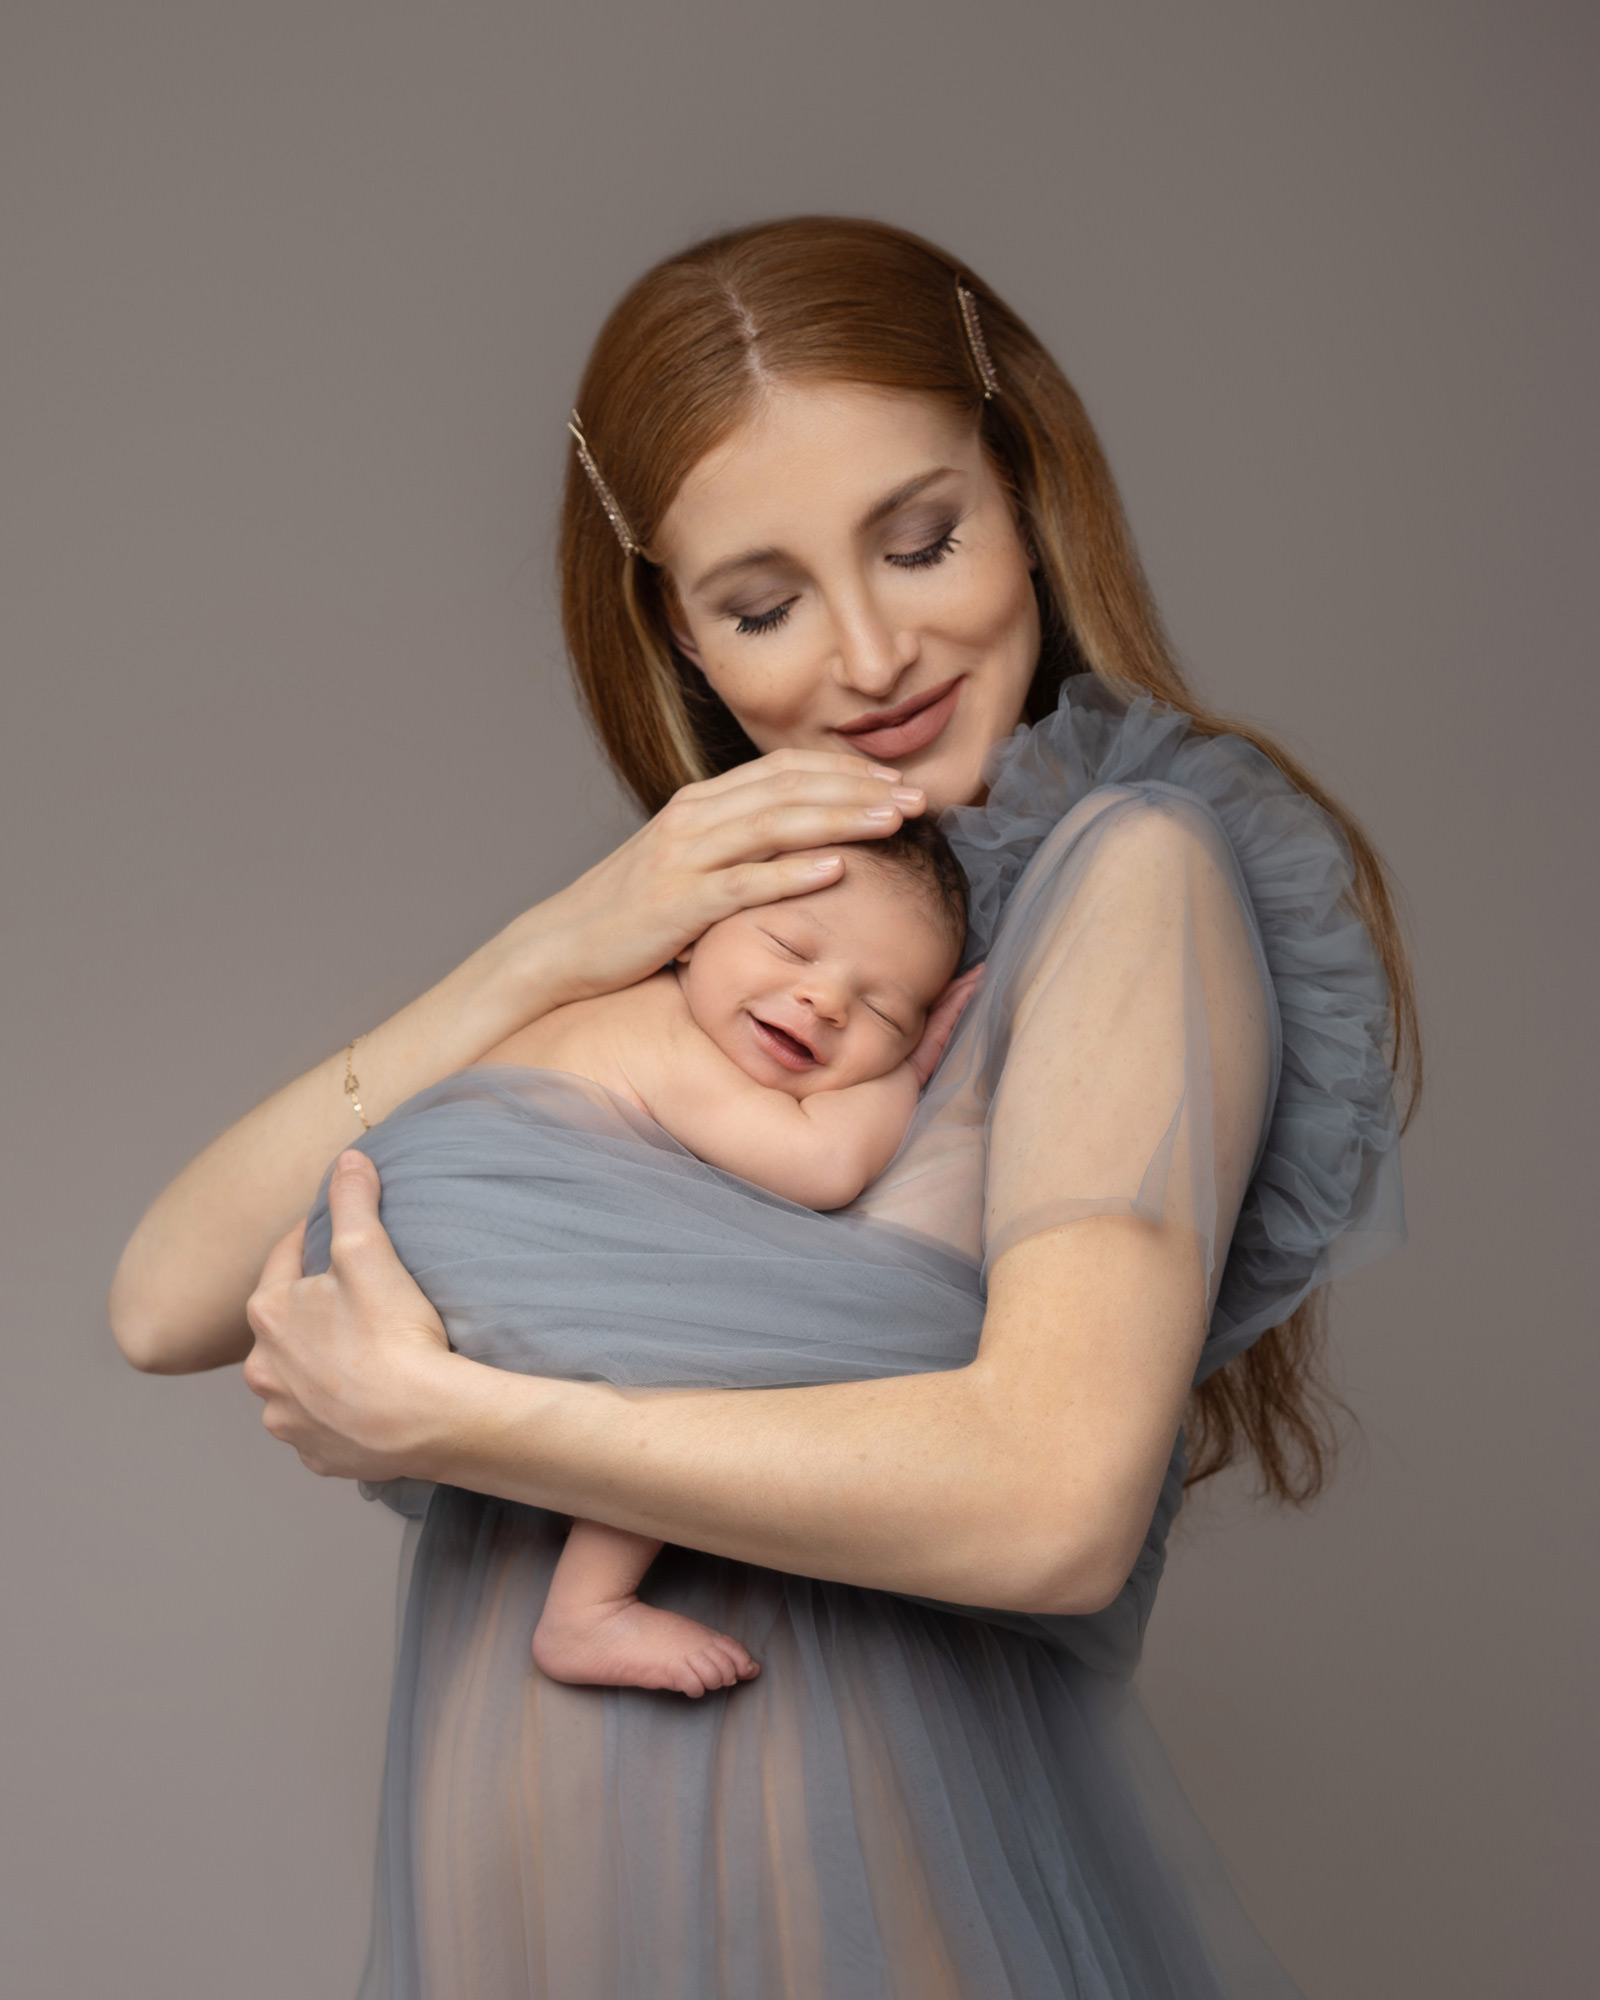 mum with blue dress on cradling newborn baby by newborn photographer in Guildford, Surrey